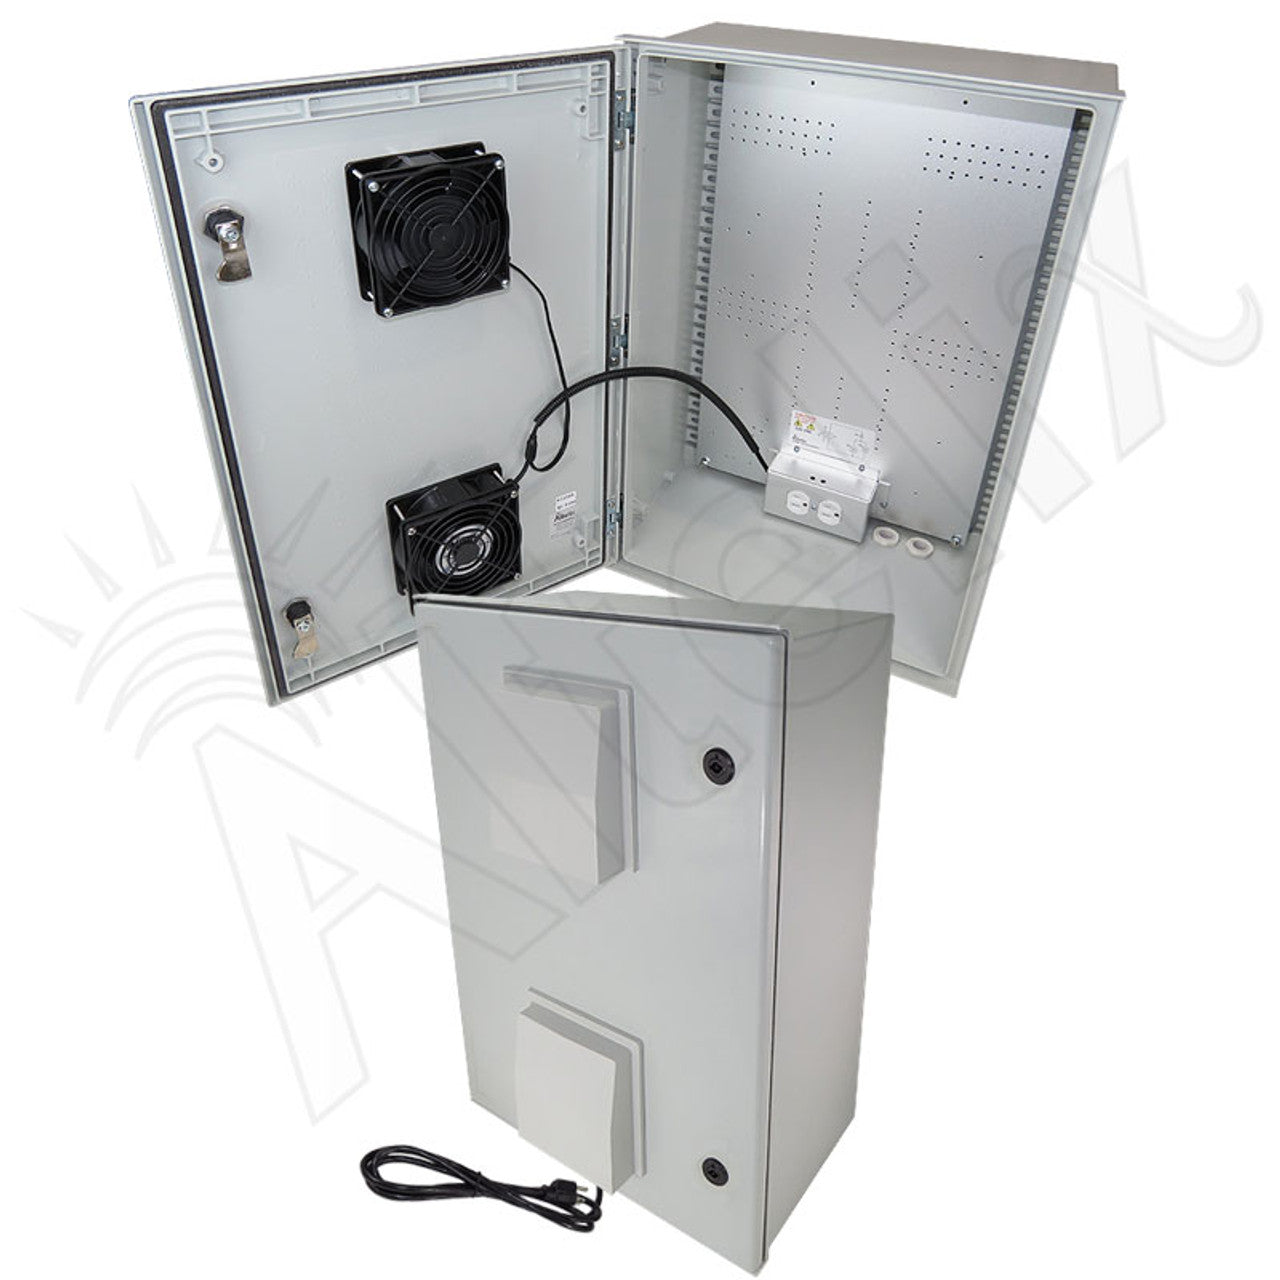 Altelix Vented Fiberglass Weatherproof NEMA Enclosure with Cooling Fan, 120 VAC Outlets & Power Cord